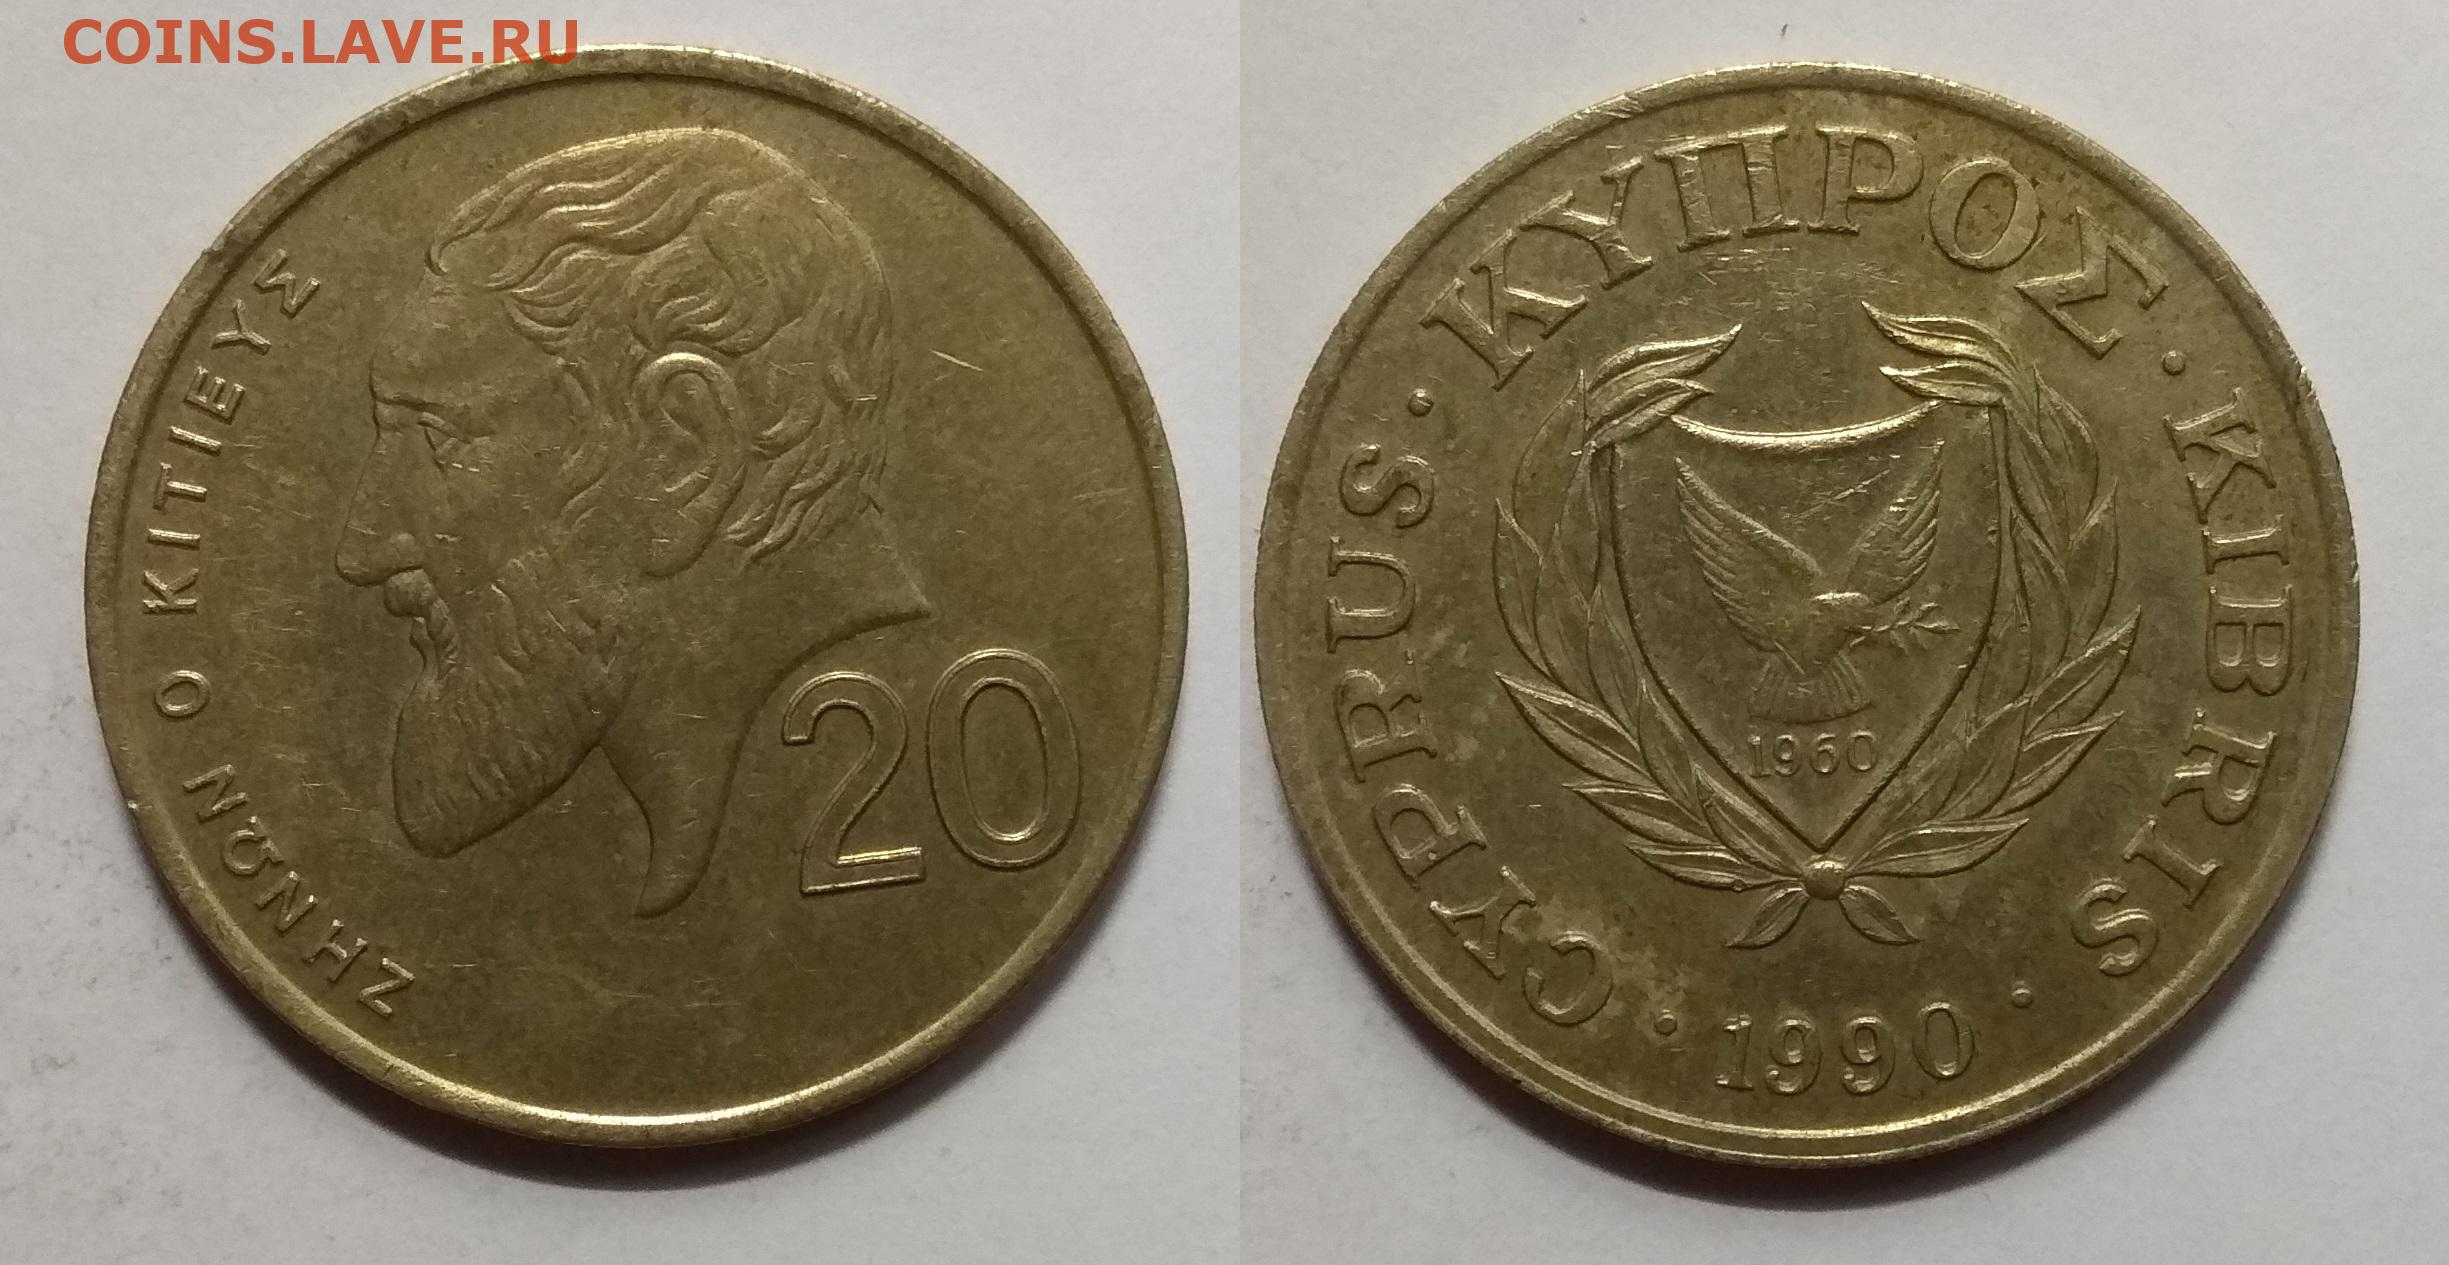 5 14 в рублях. Австрия 1 шиллинг 1961 год. Кипр 20 центов 1990. Сомали 10 чентезимо 1967. Австрия 1 шиллинг 1983 год.